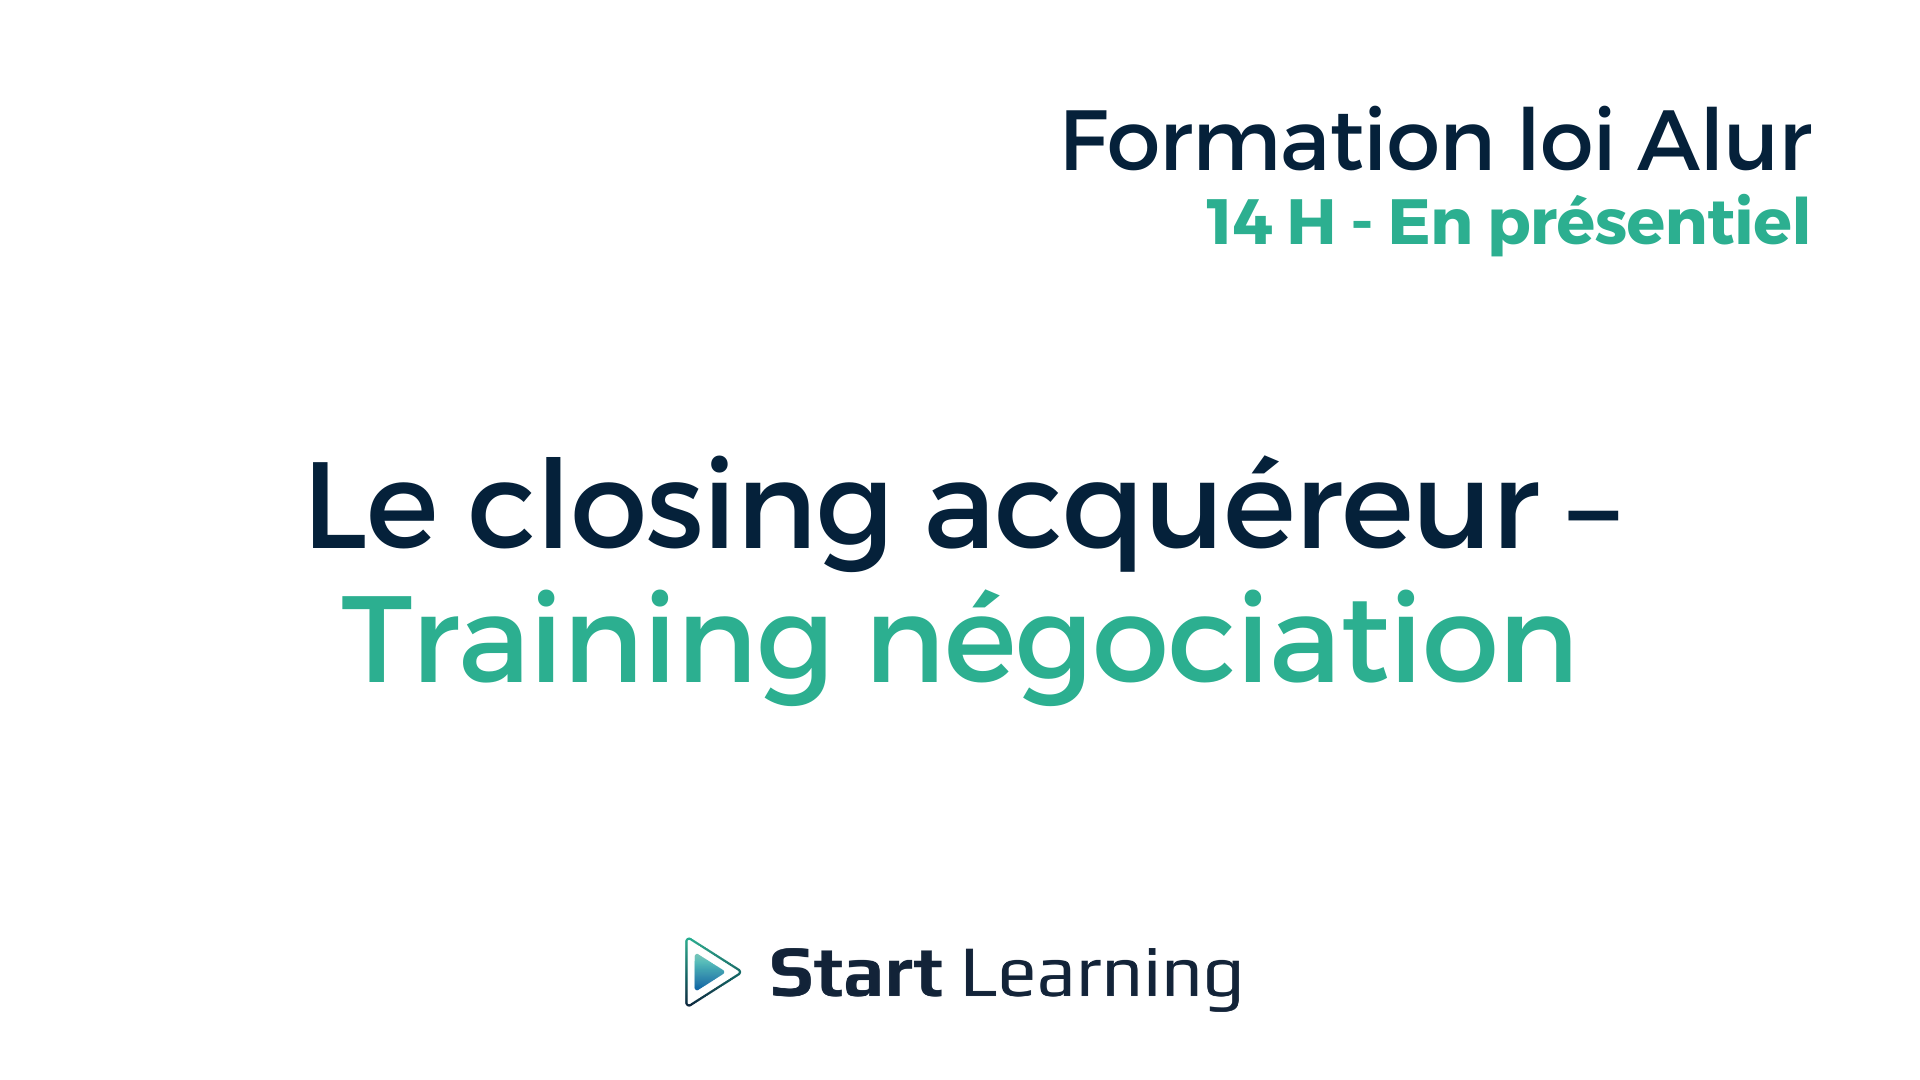 Formation loi Alur - Closing acquéreur - training négociation